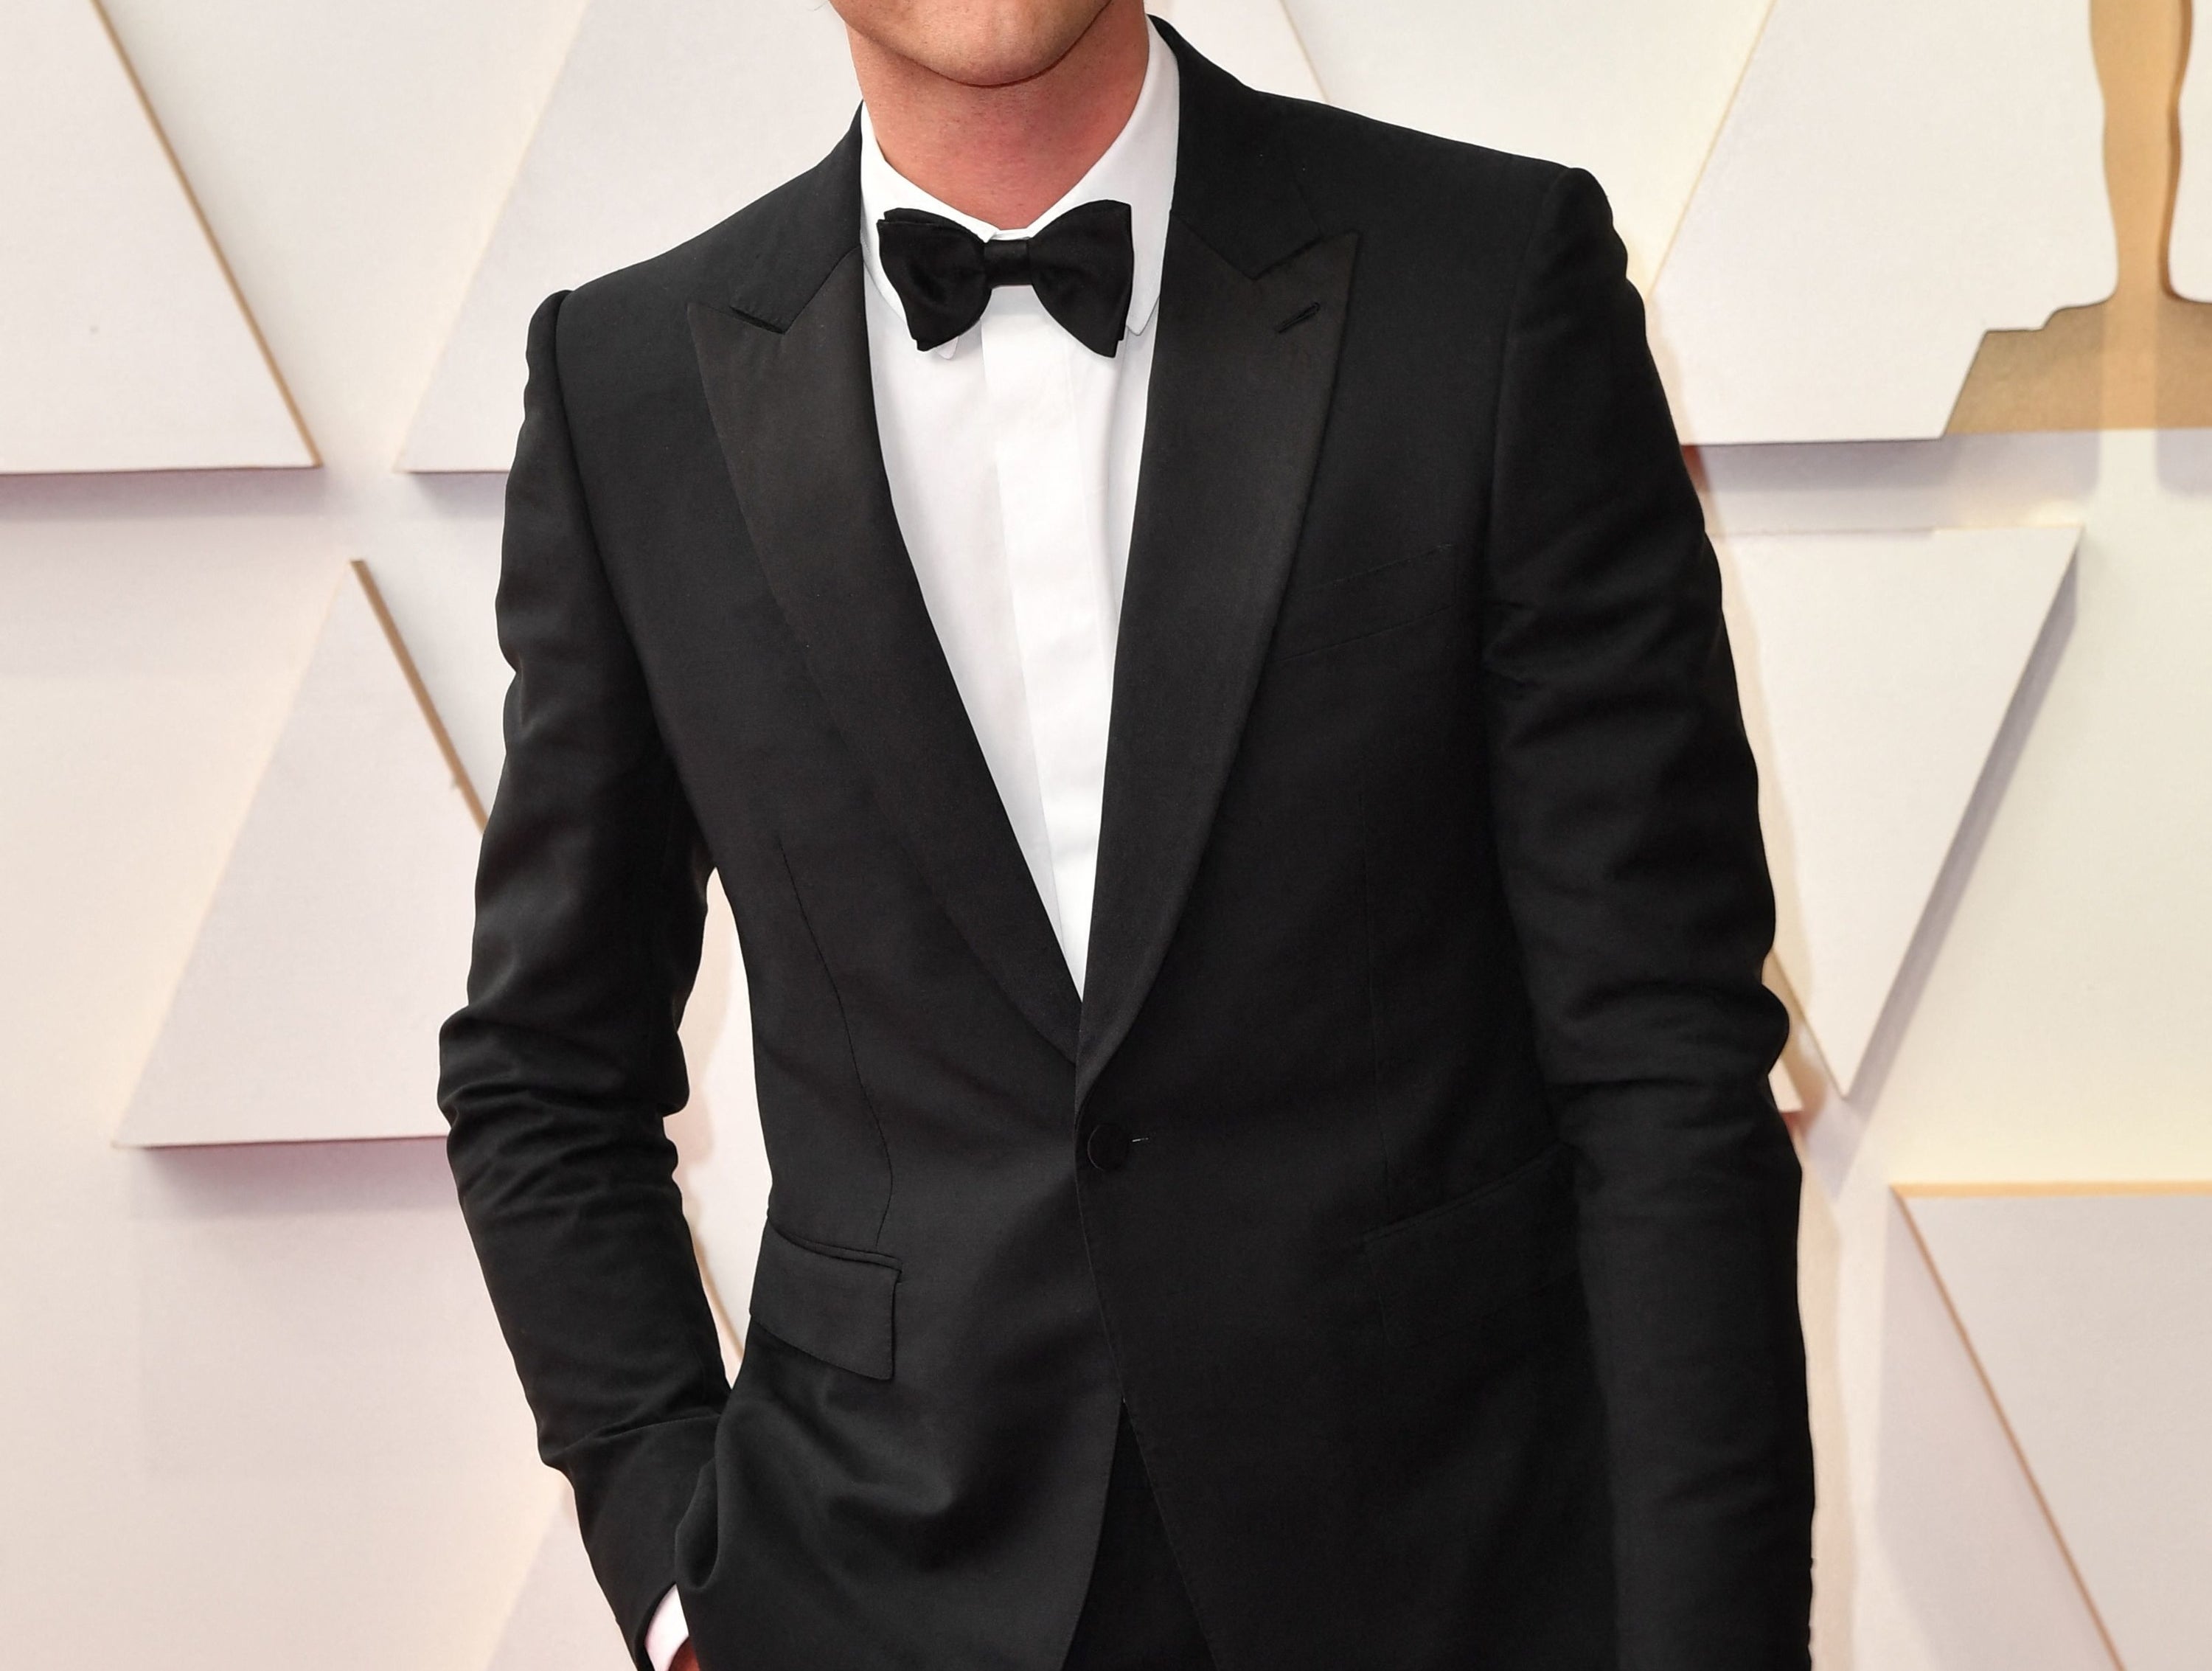 Jacob Elordi smiles at the Oscars